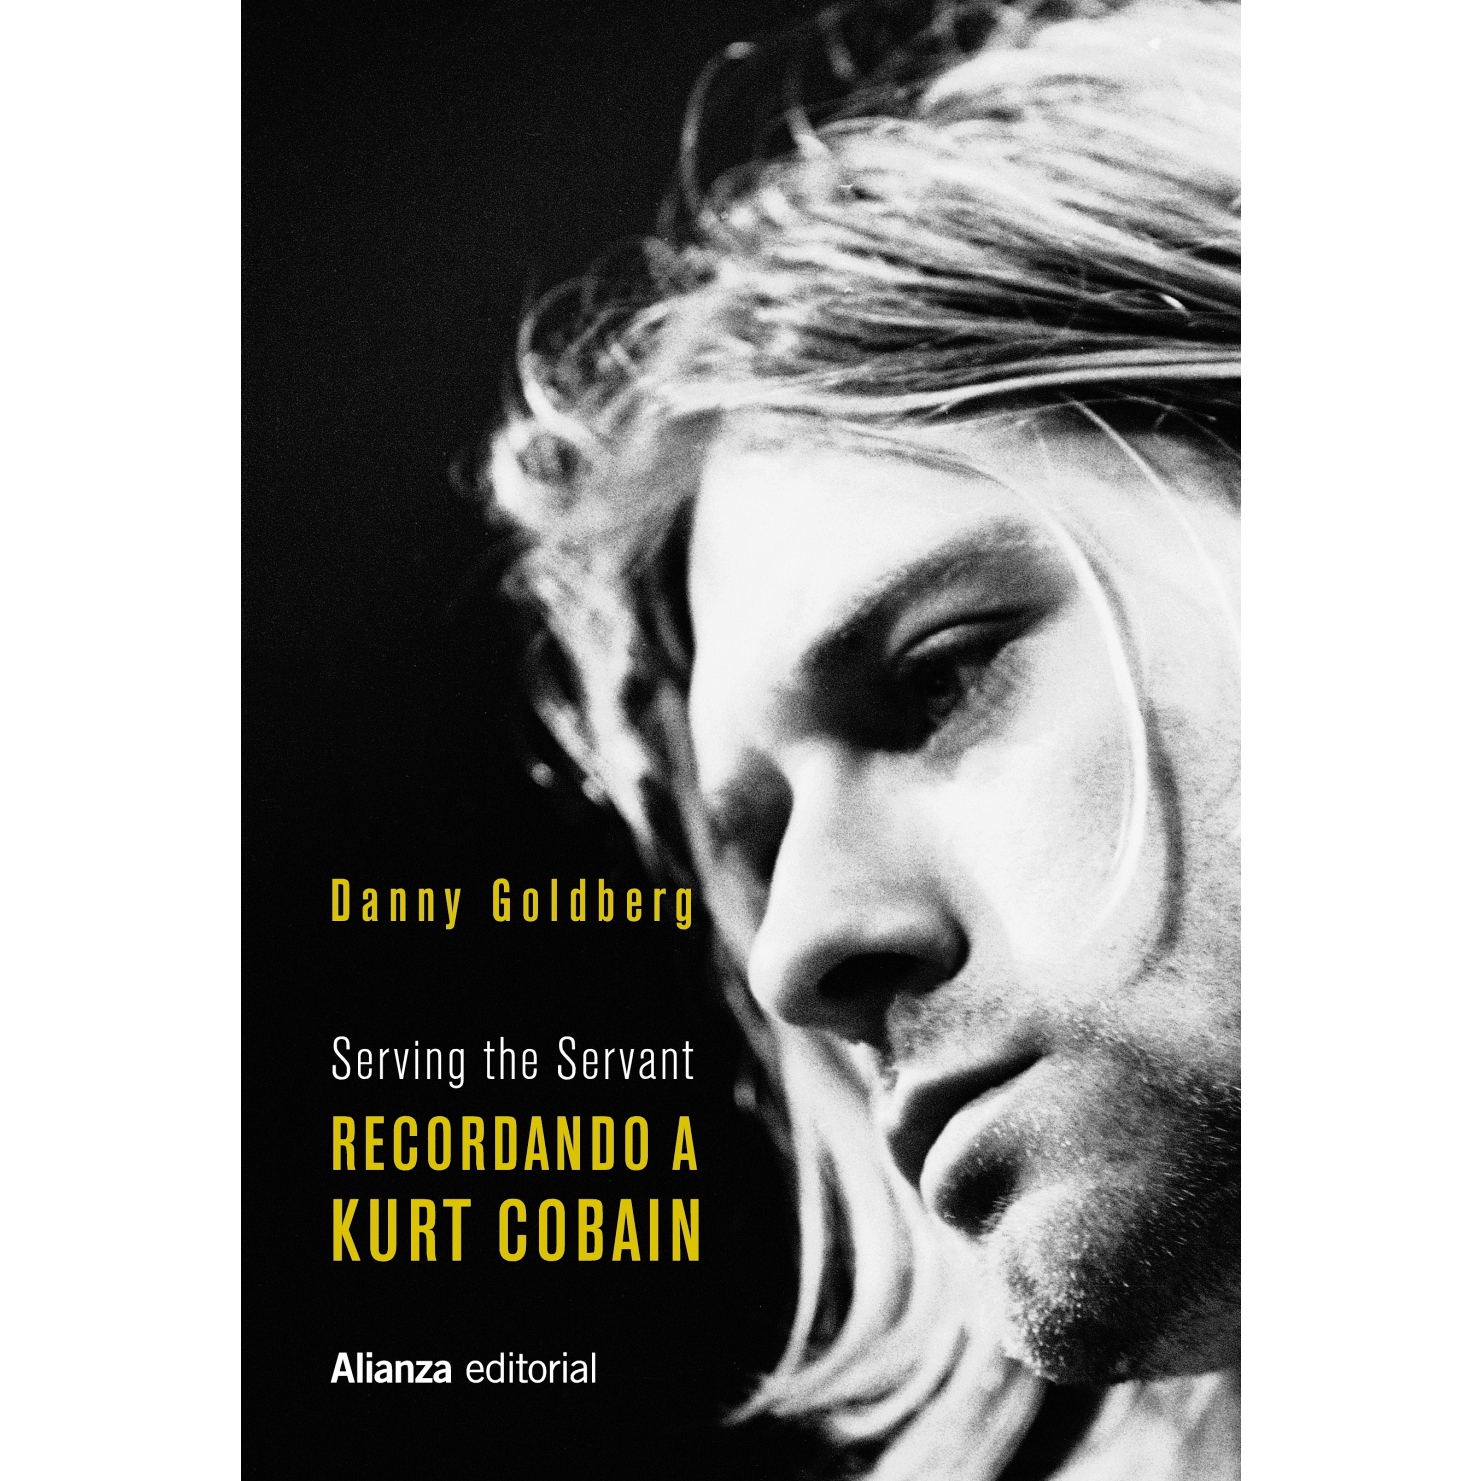 "Recordando a Kurt Cobain" de Danny Goldberg